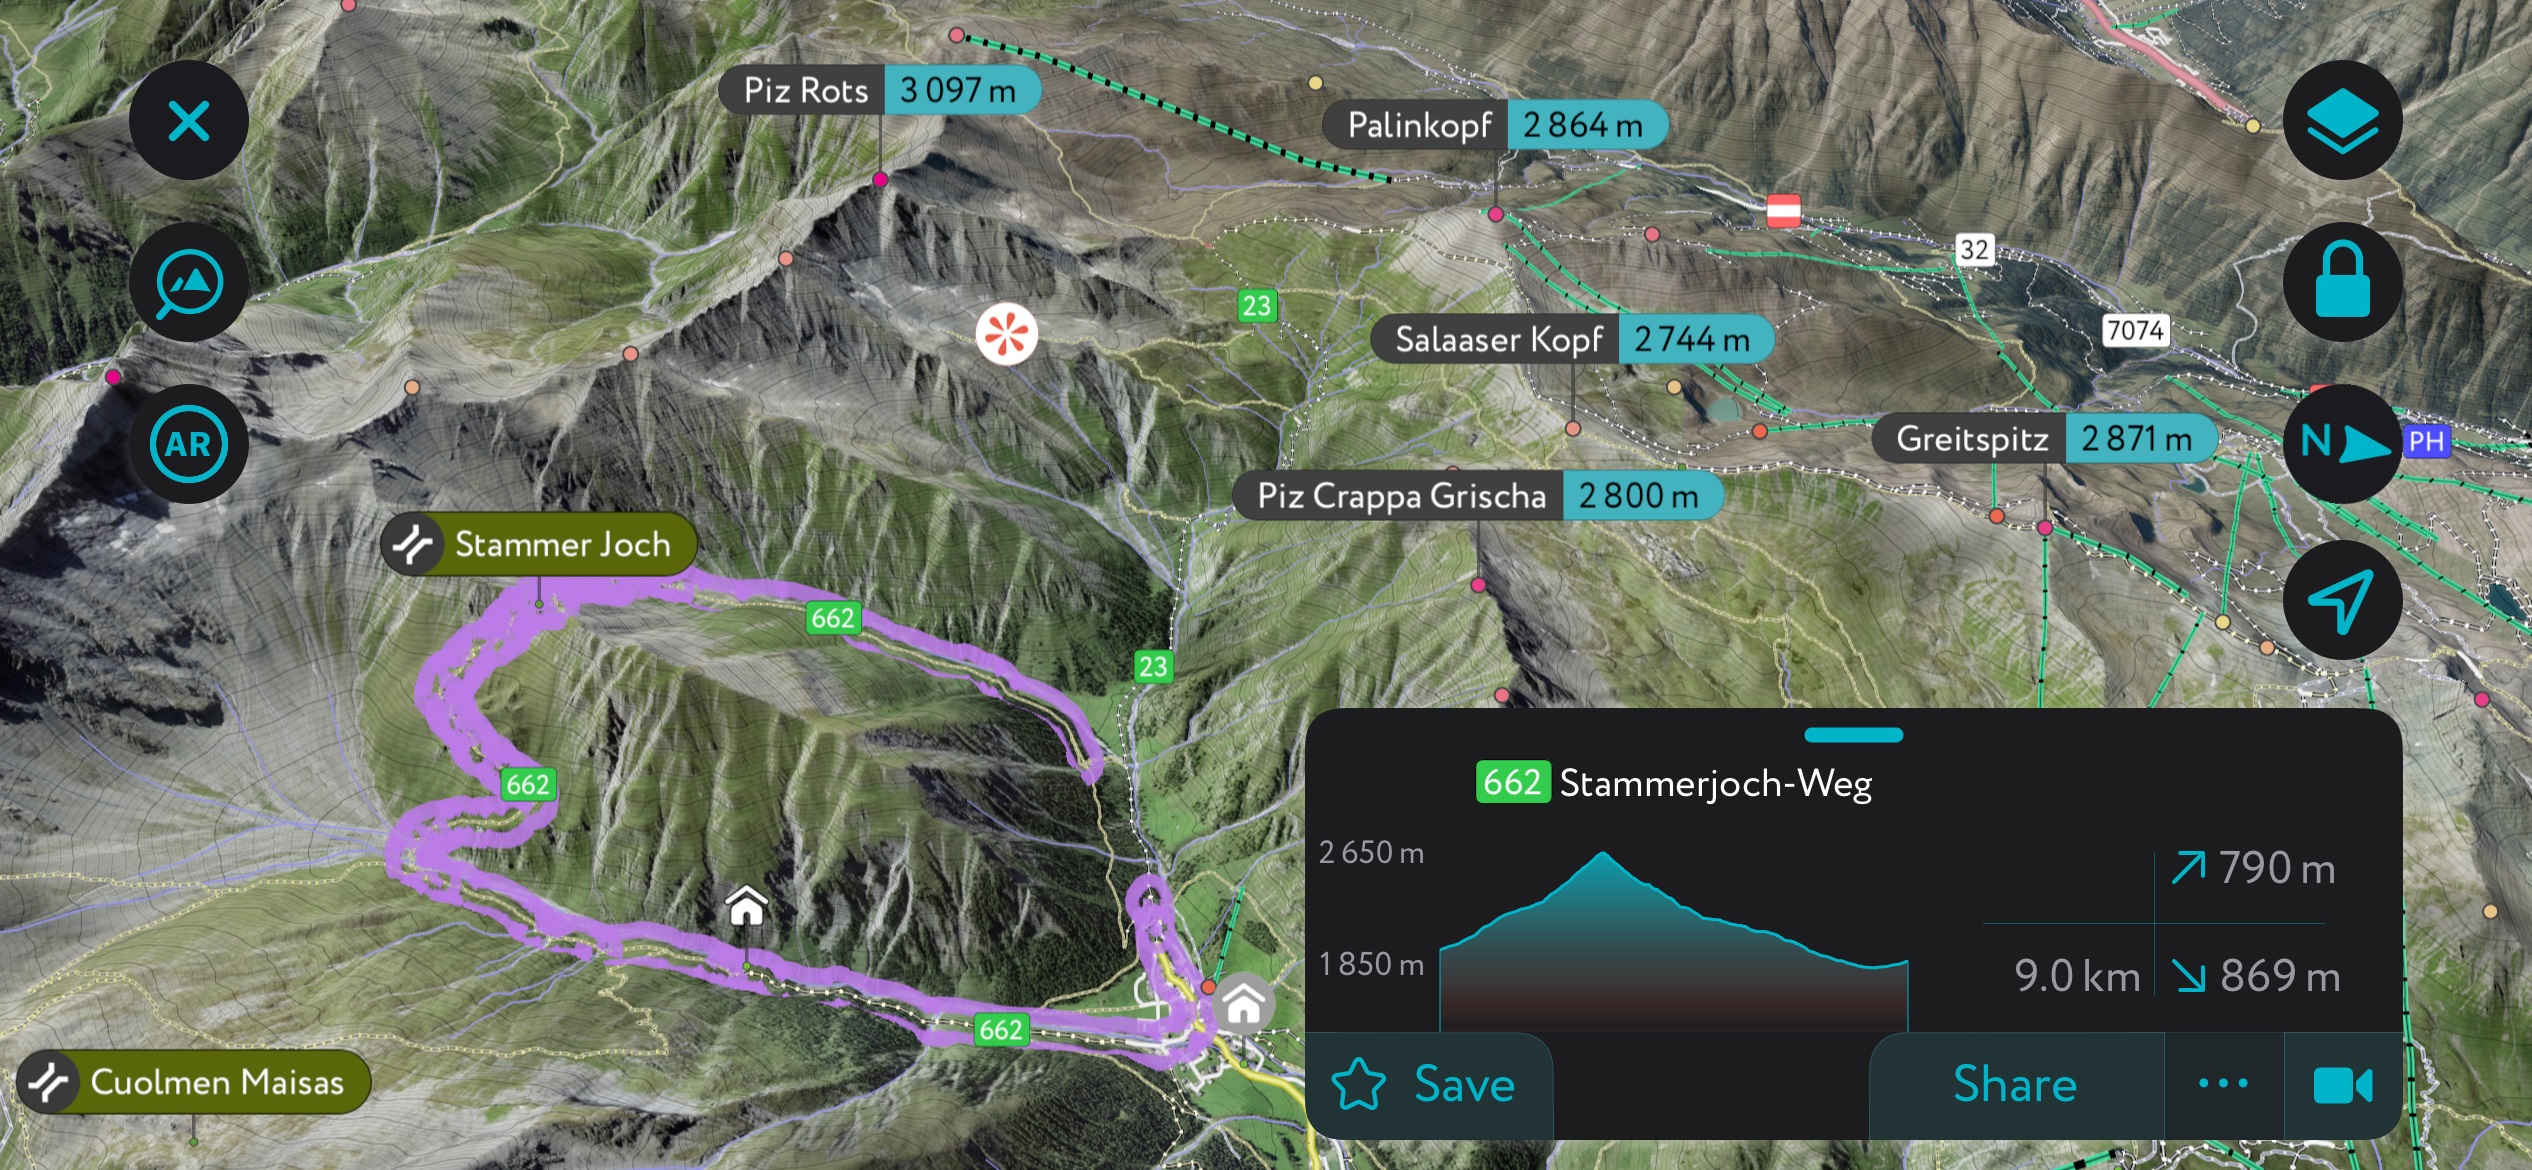 A generation of the Samnaun Alps using PeakVisor’s mobile app.